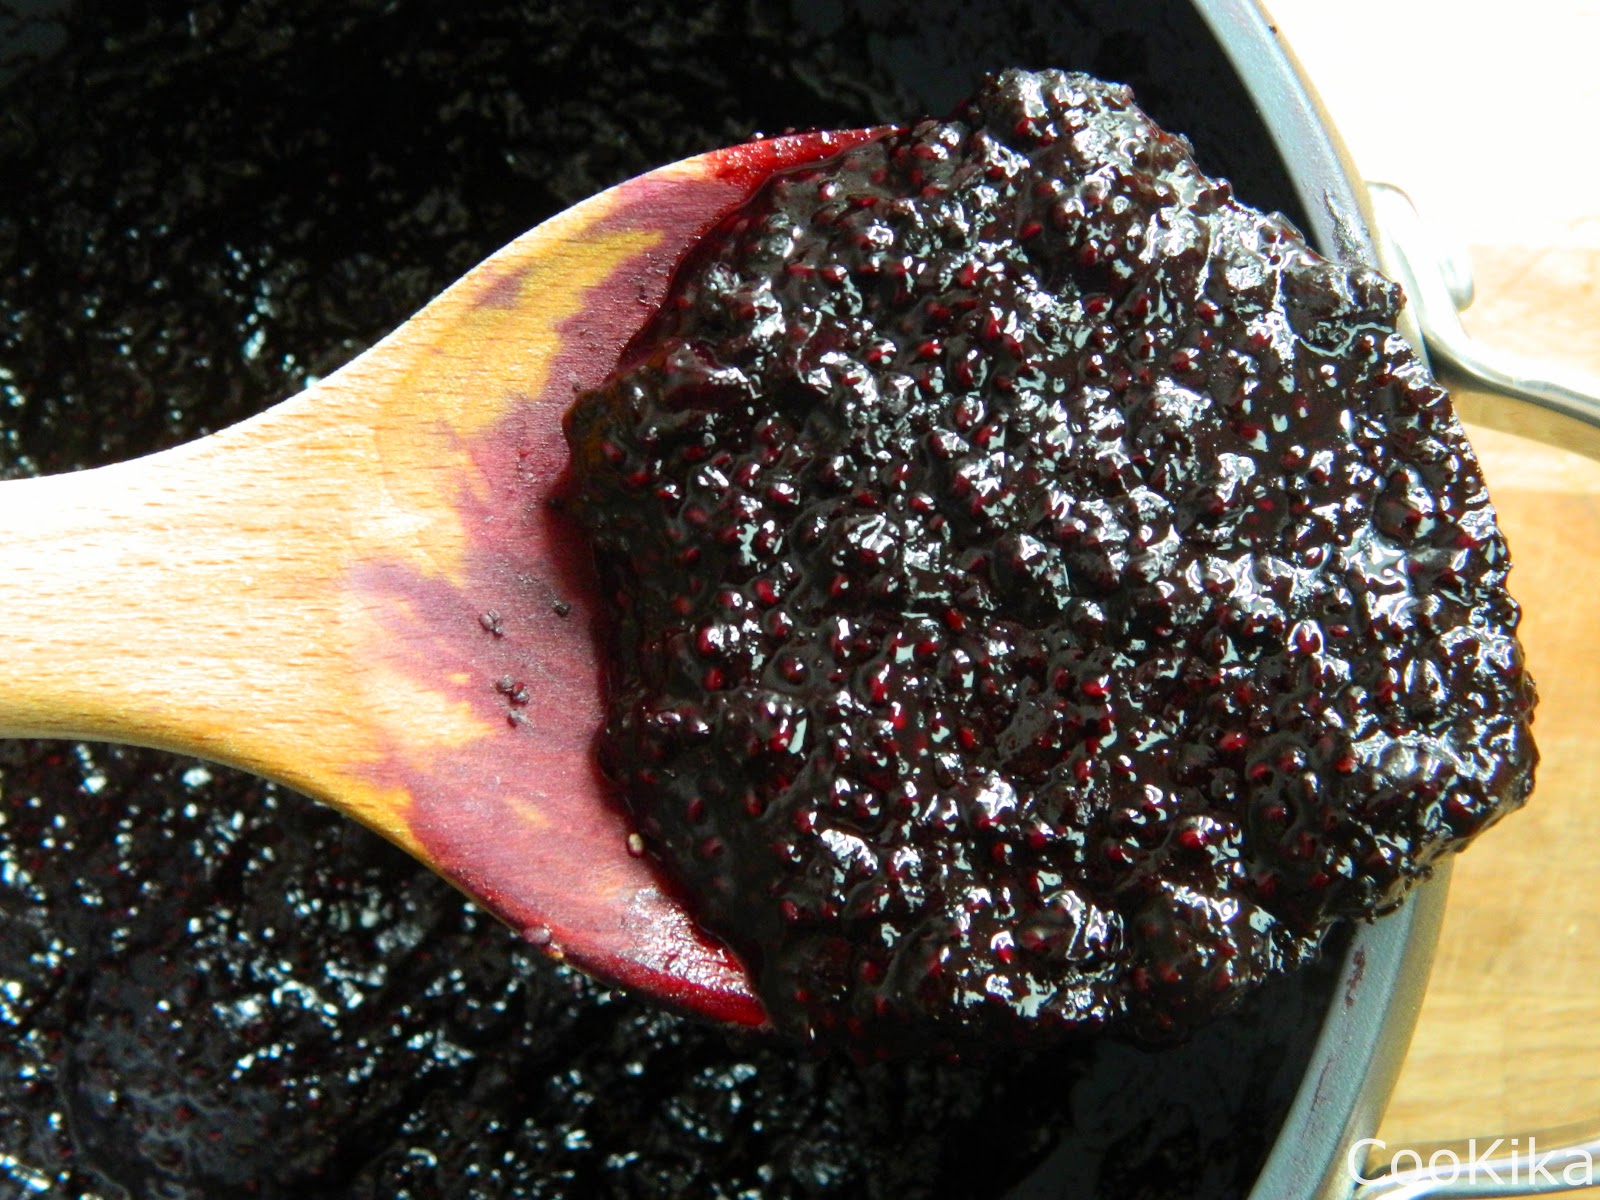 Blueberry jam chia seeds